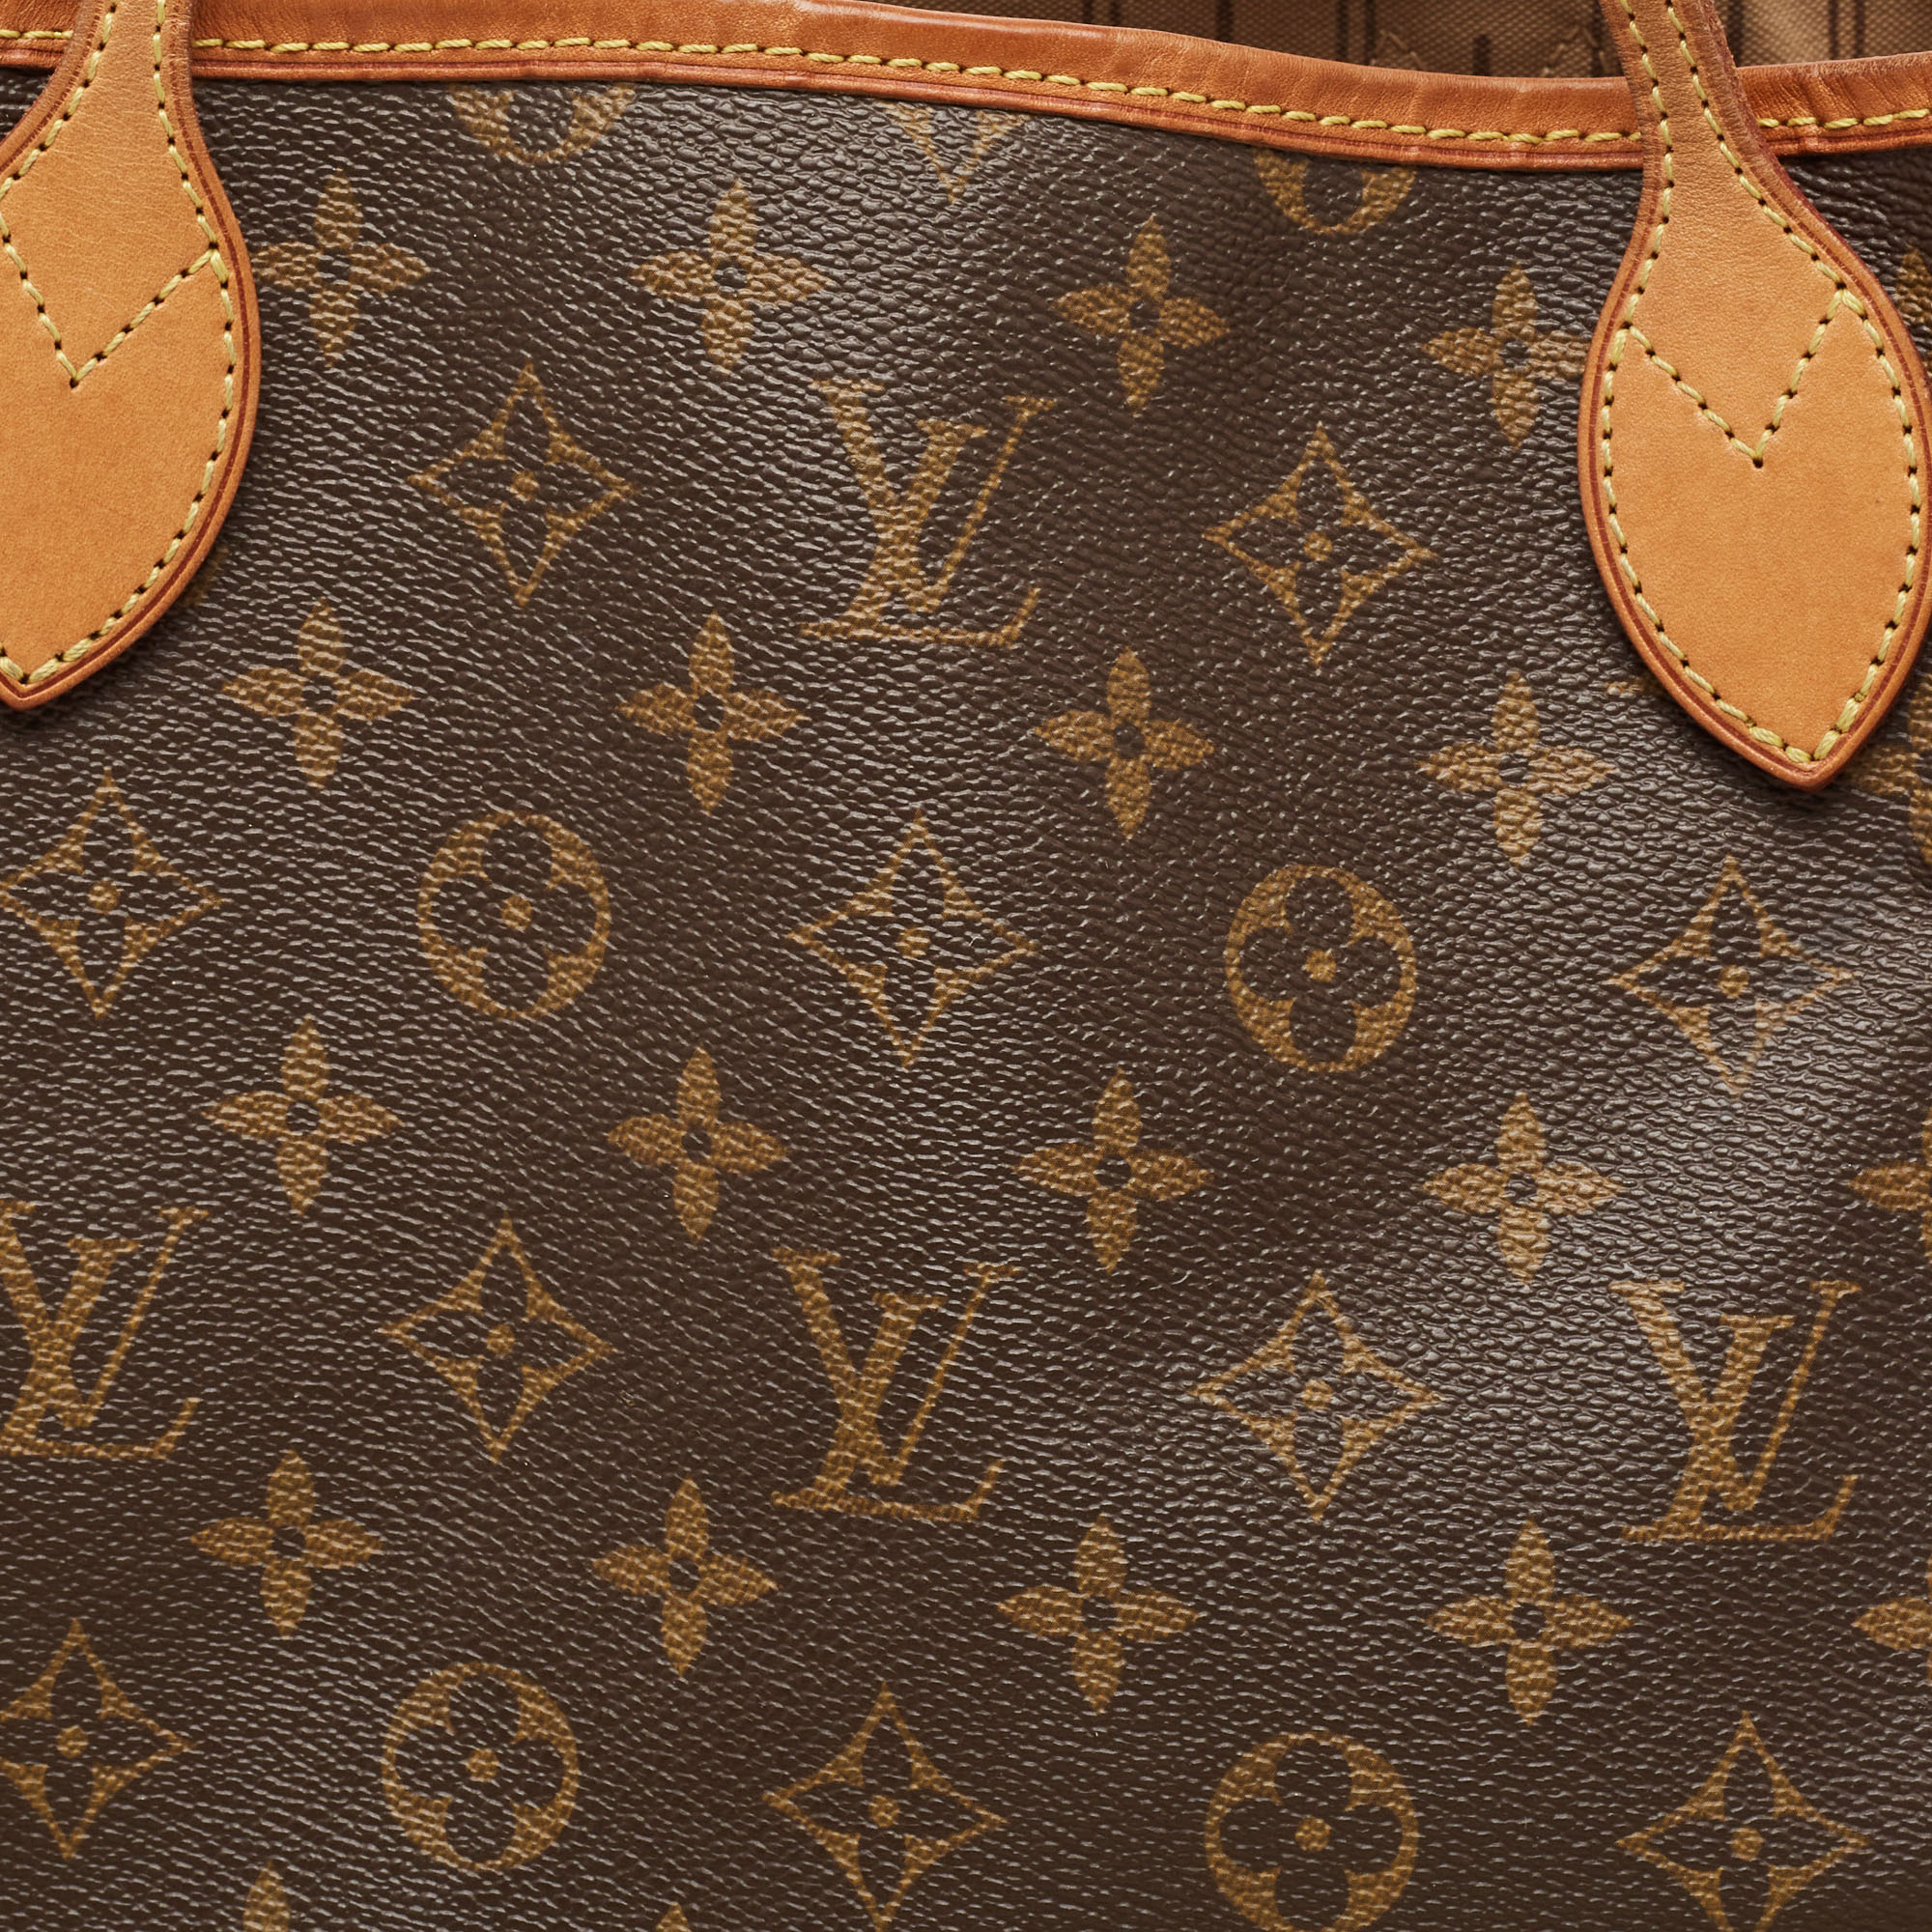 Louis Vuitton Monogram Canvas Neverfull GM Bag